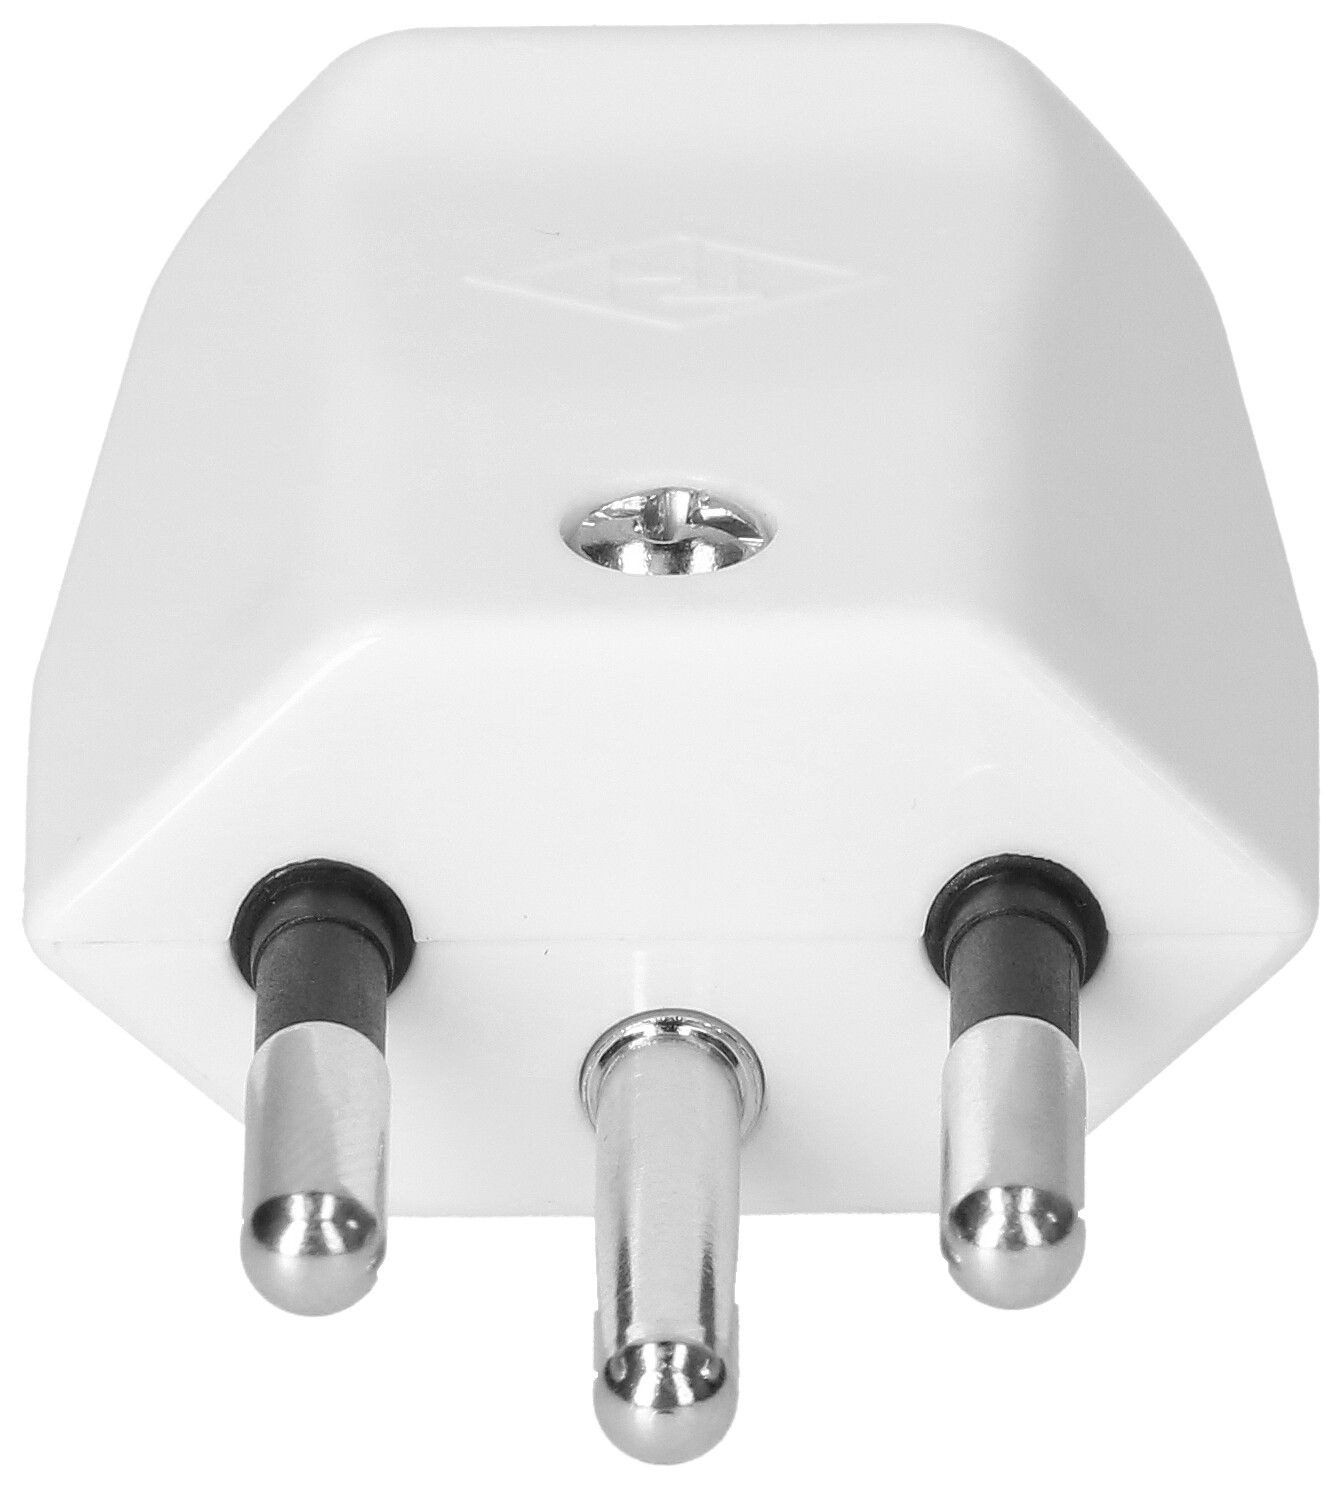 Plug TH type 12 3-pol white